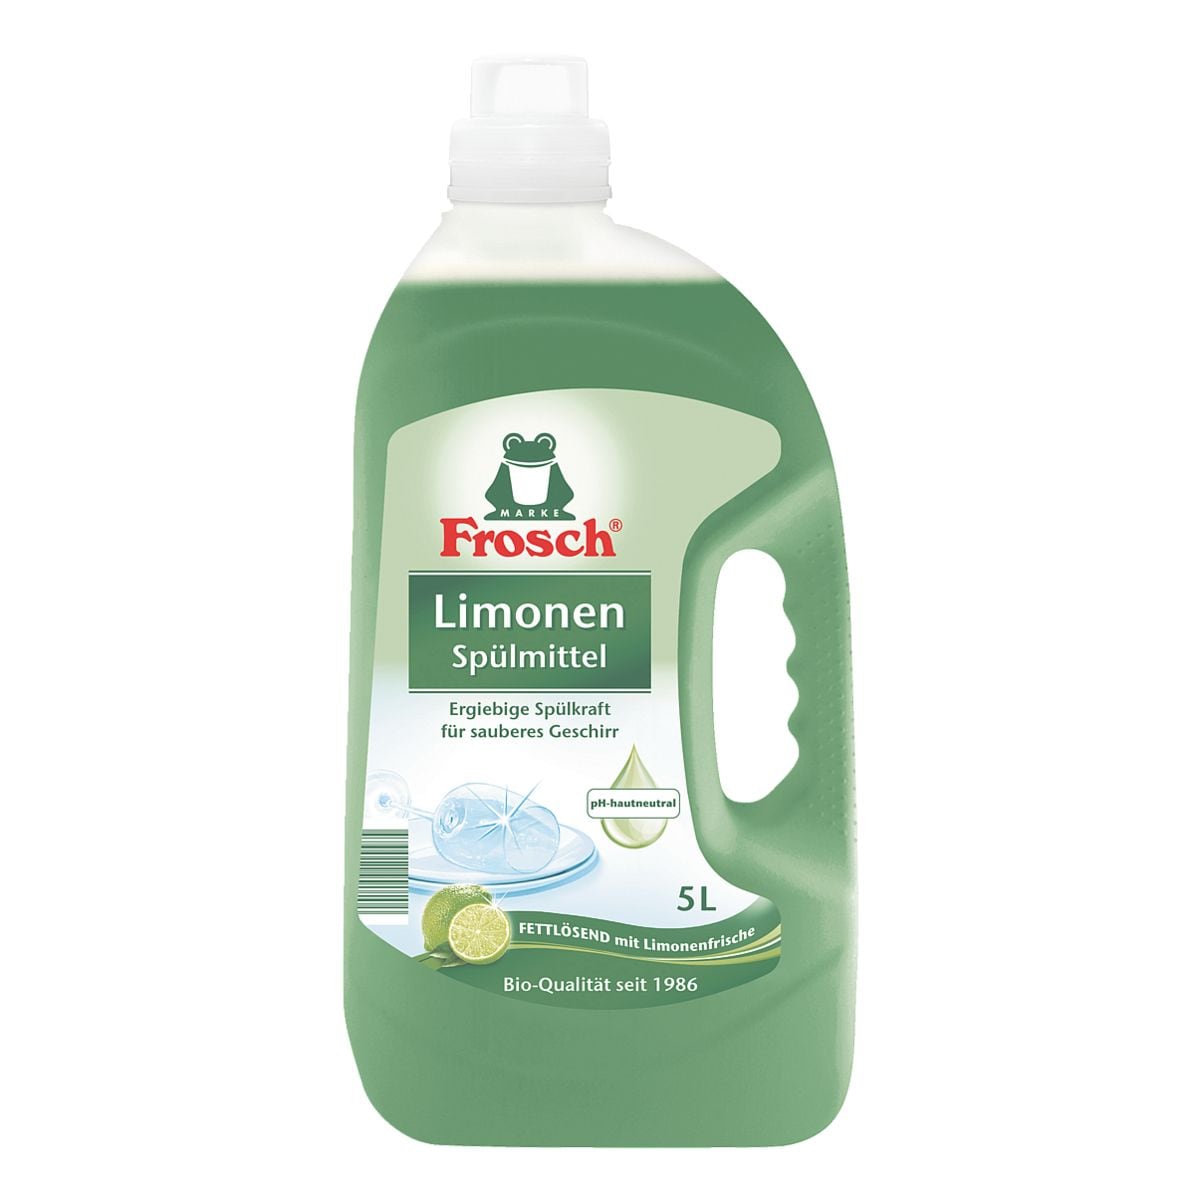 Frosch Geschirrsplmittel Limonen 5 Liter